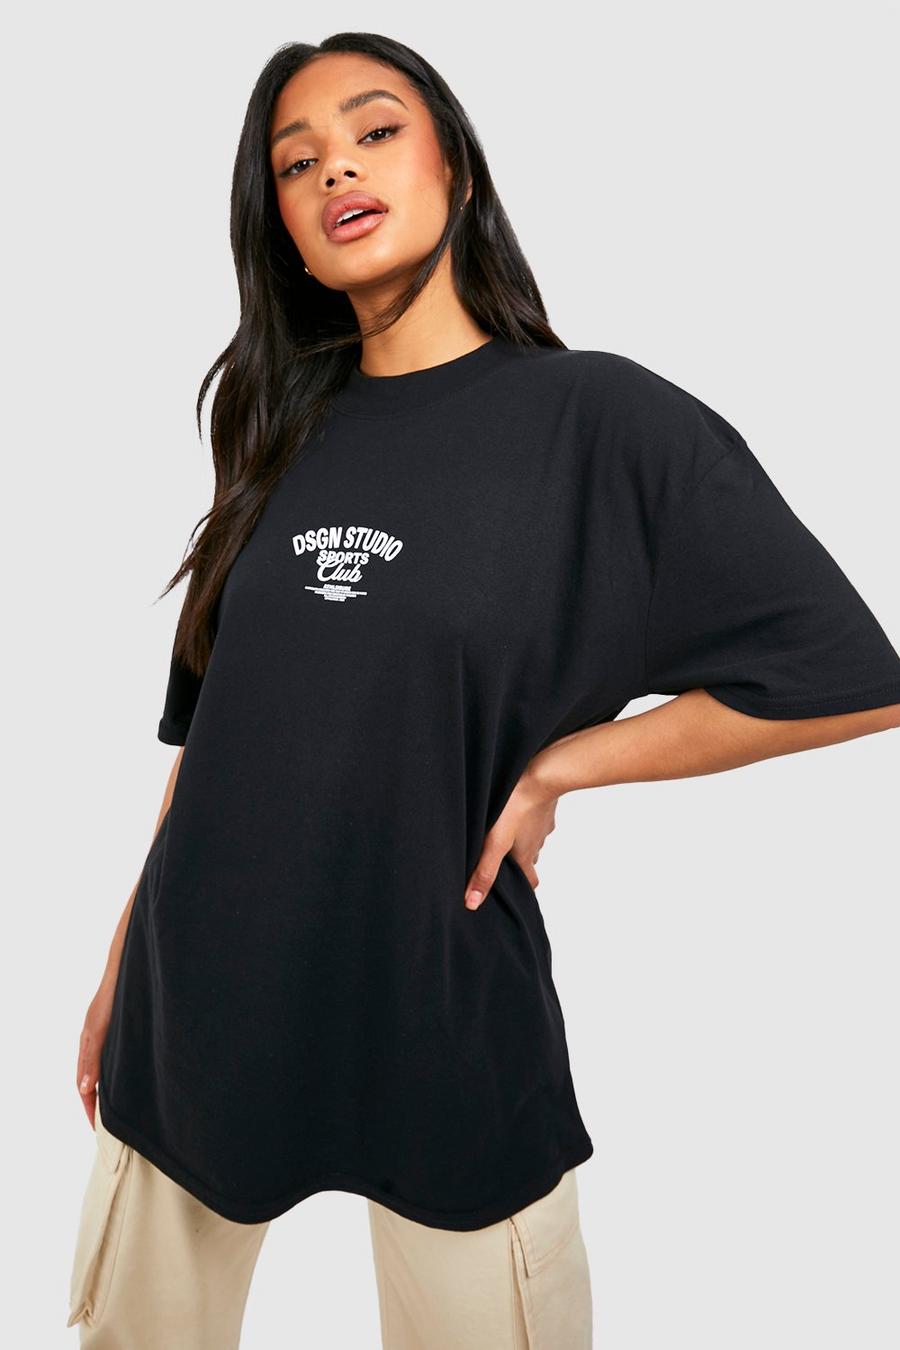 T-shirt oversize con slogan Dsgn Studio Sports Club, Black image number 1